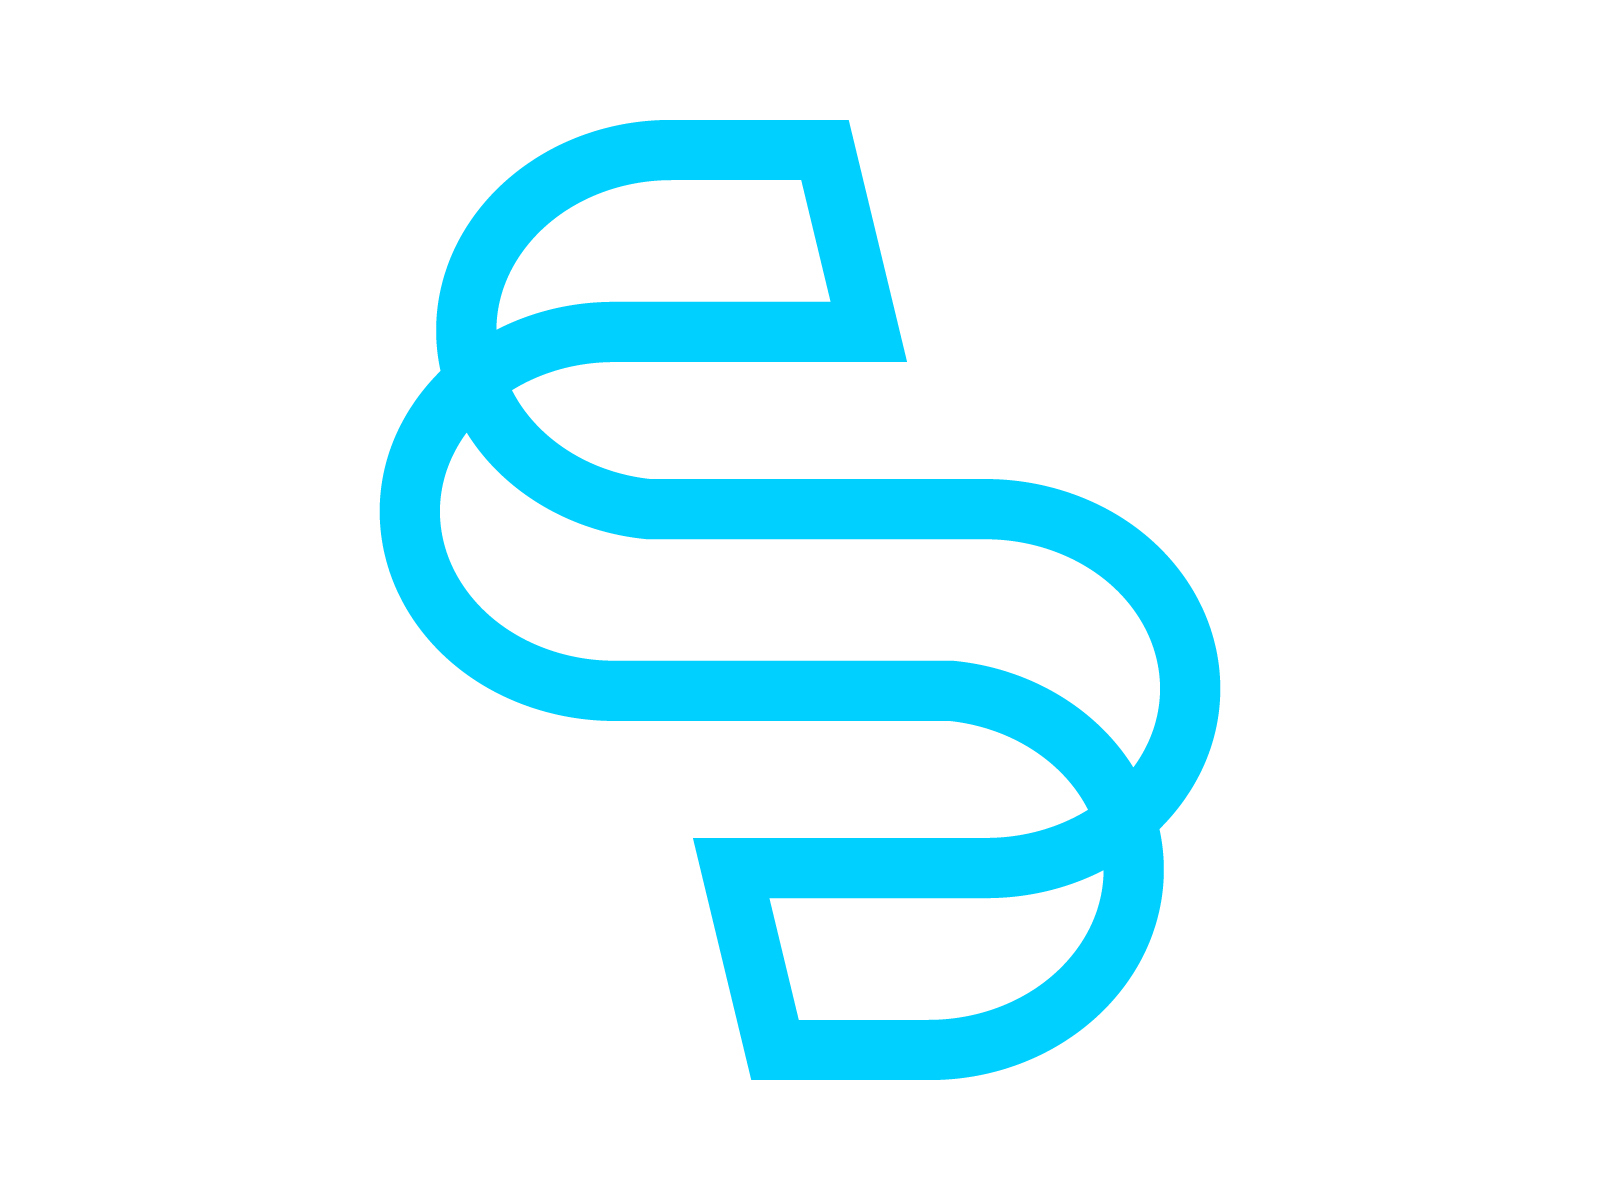 S Letter Logo by vaibhav Jadhav on Dribbble